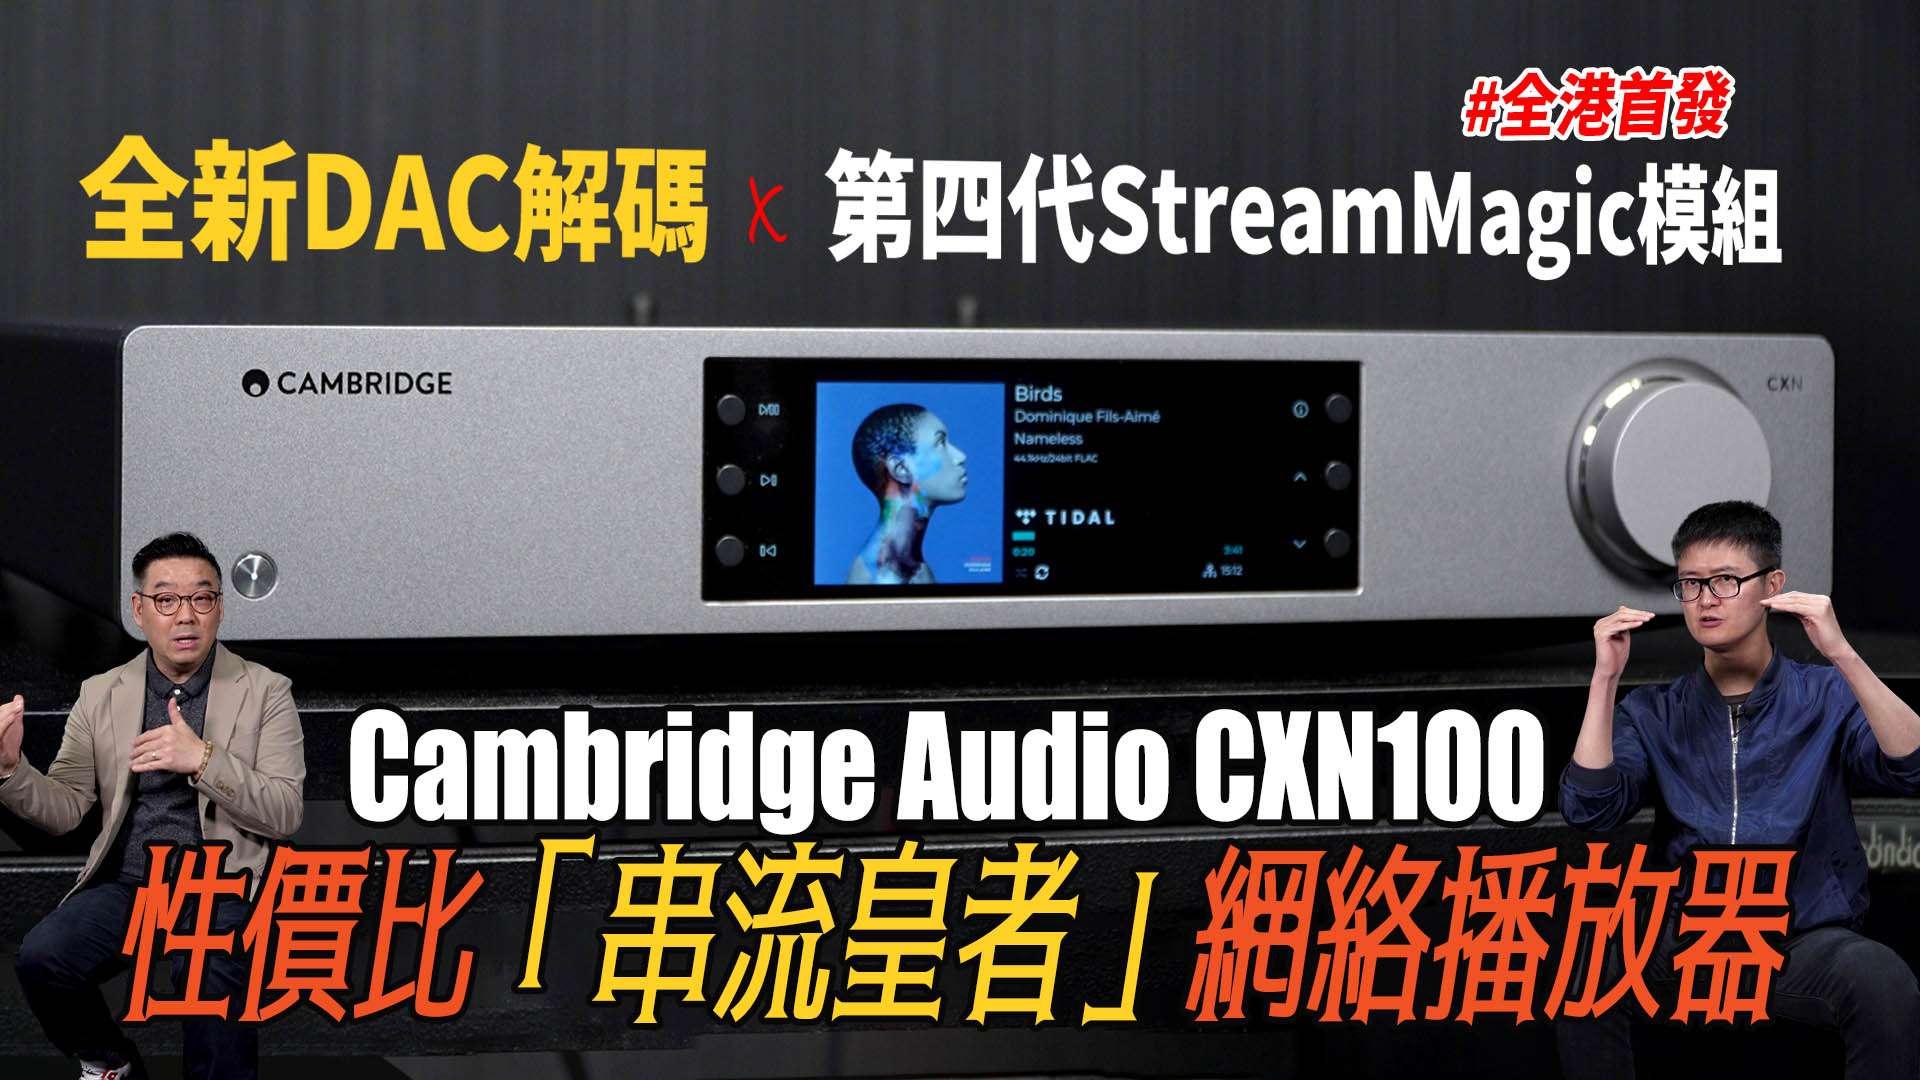 Cambridge CXN100 streamer review forum copy.jpg